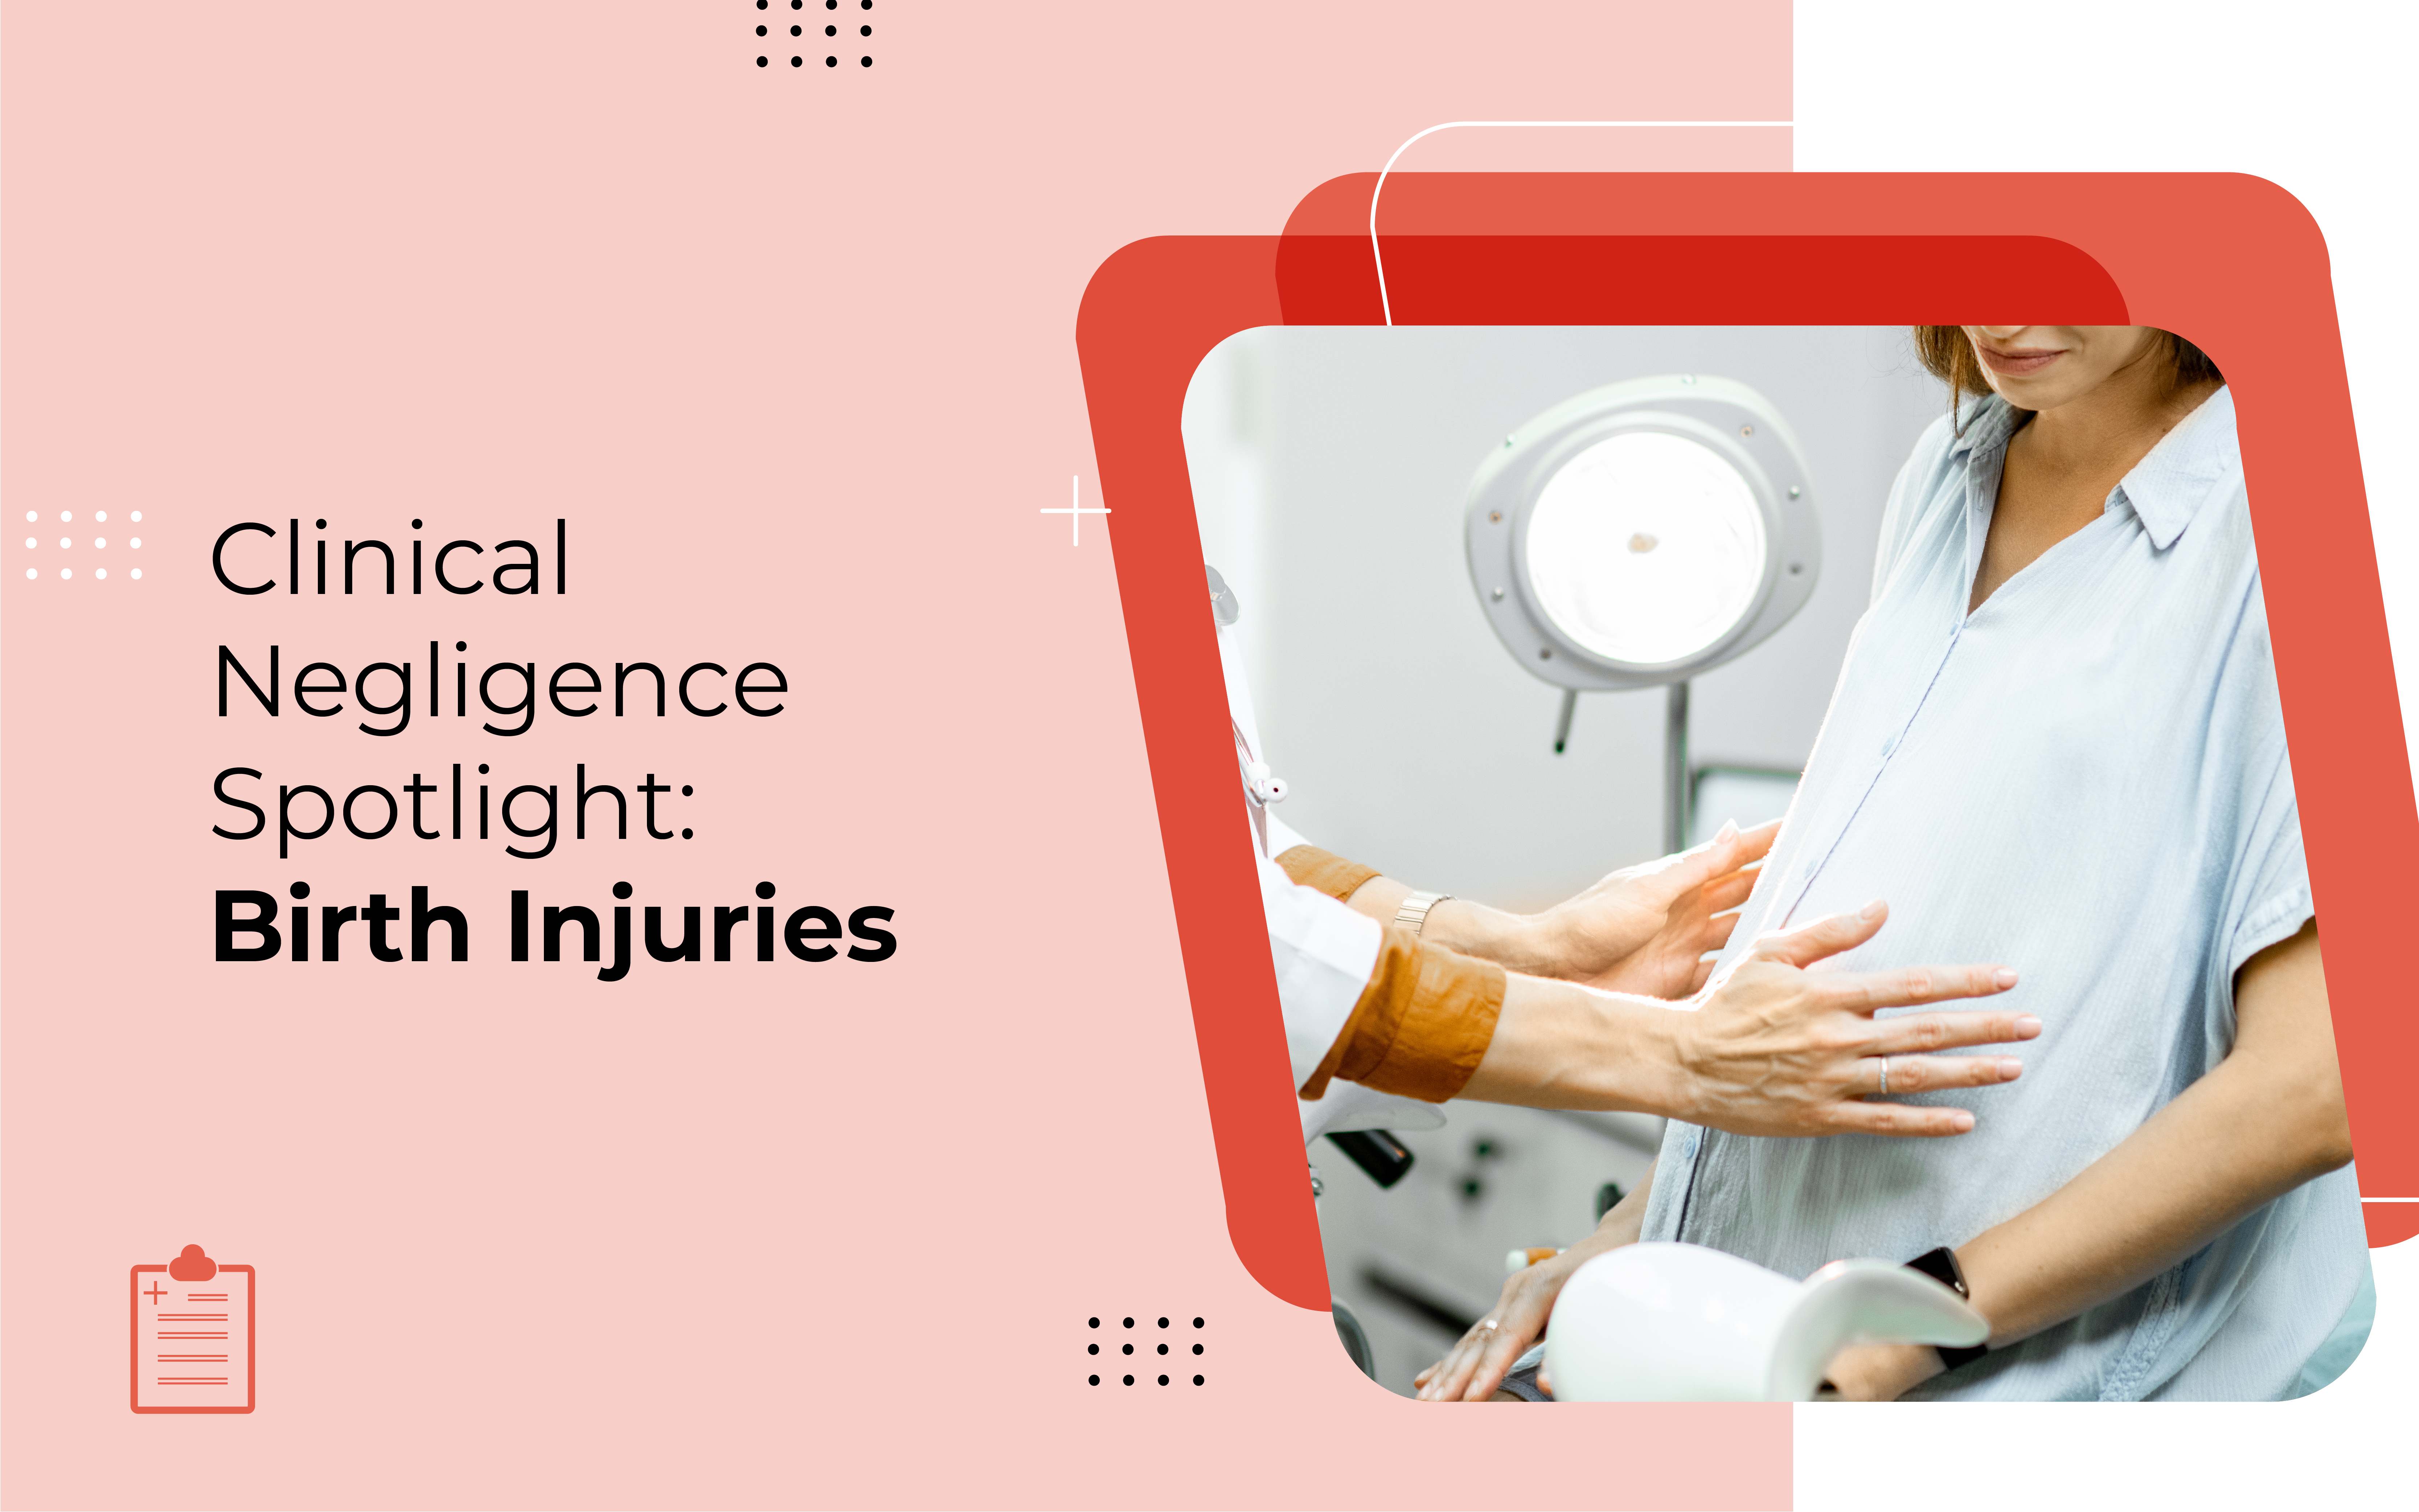 Clinical Negligence Spotlight: Birth Injuries